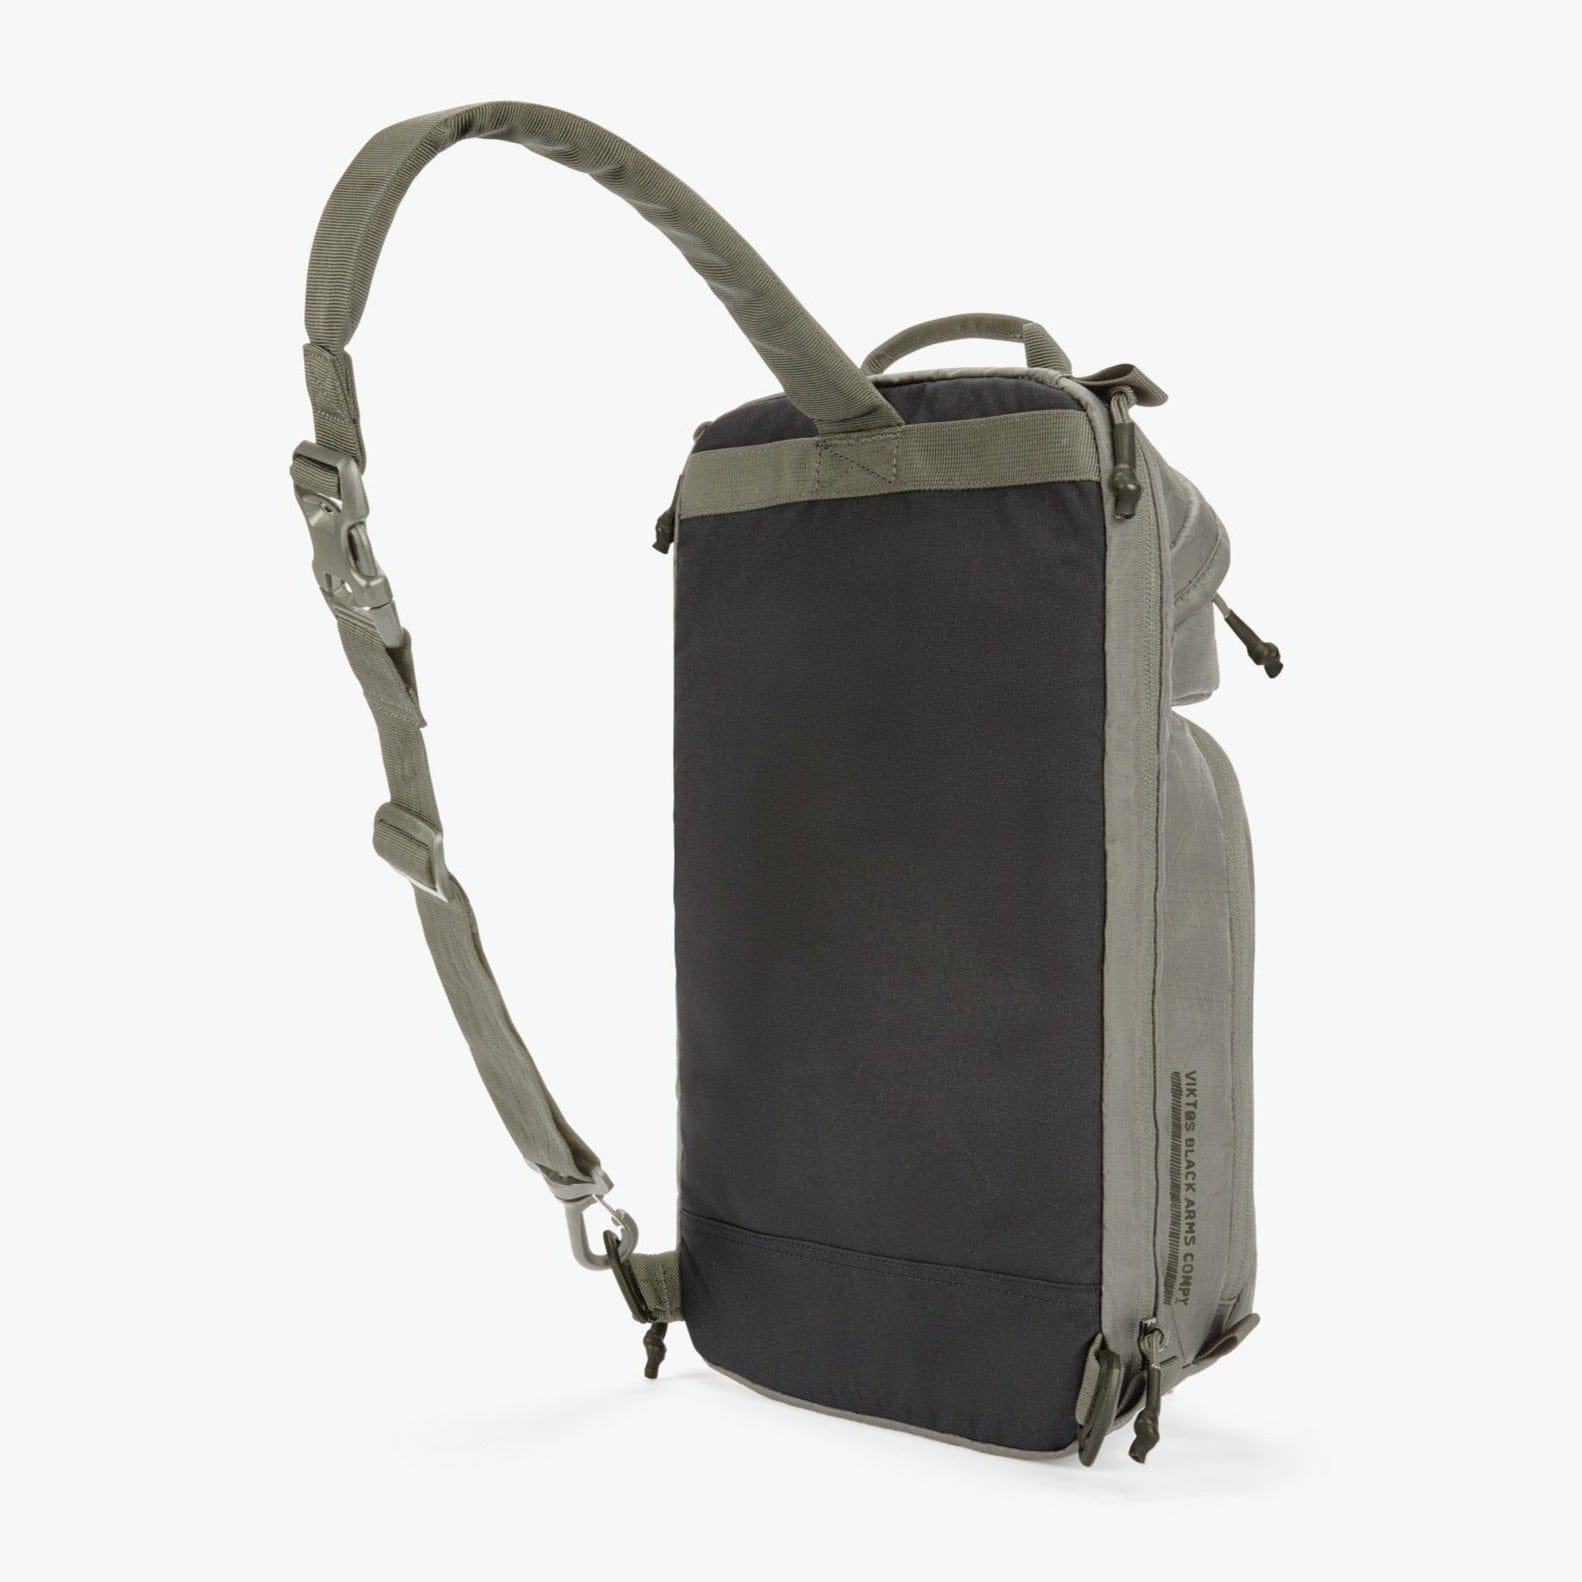 Viktos Upscale XL Sling Bag, Midwatch